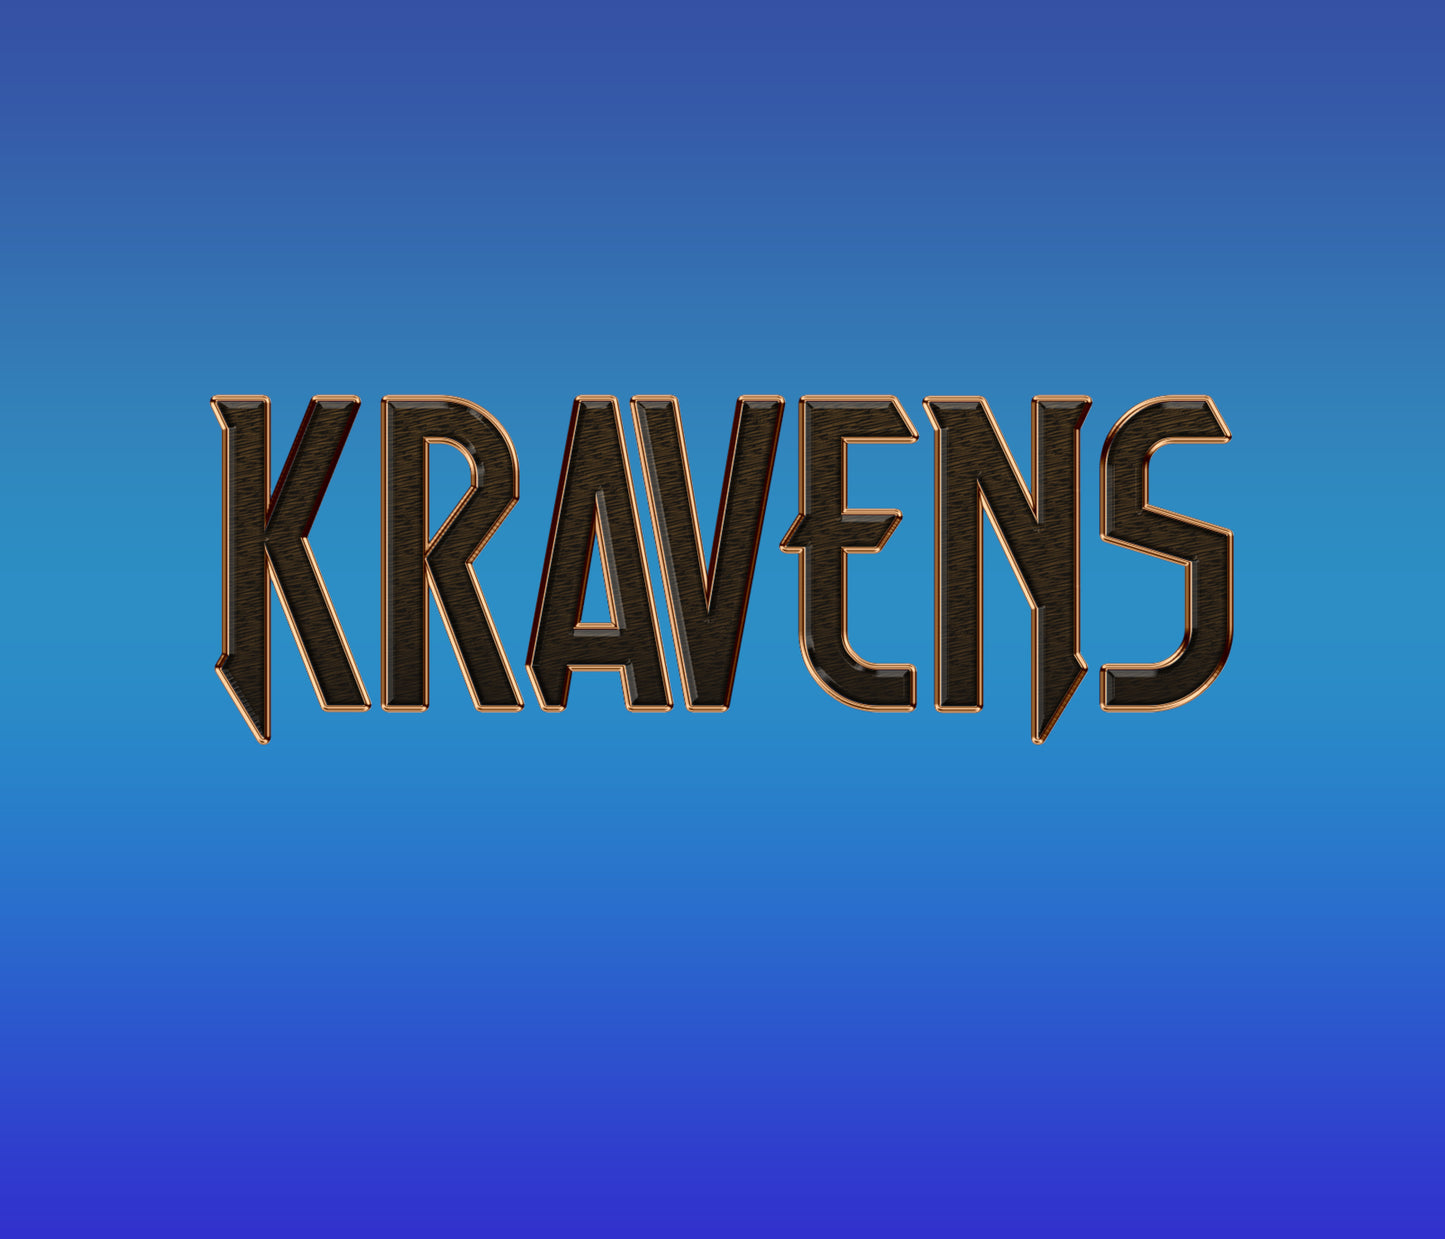 Kraven the Hunter Textured Font